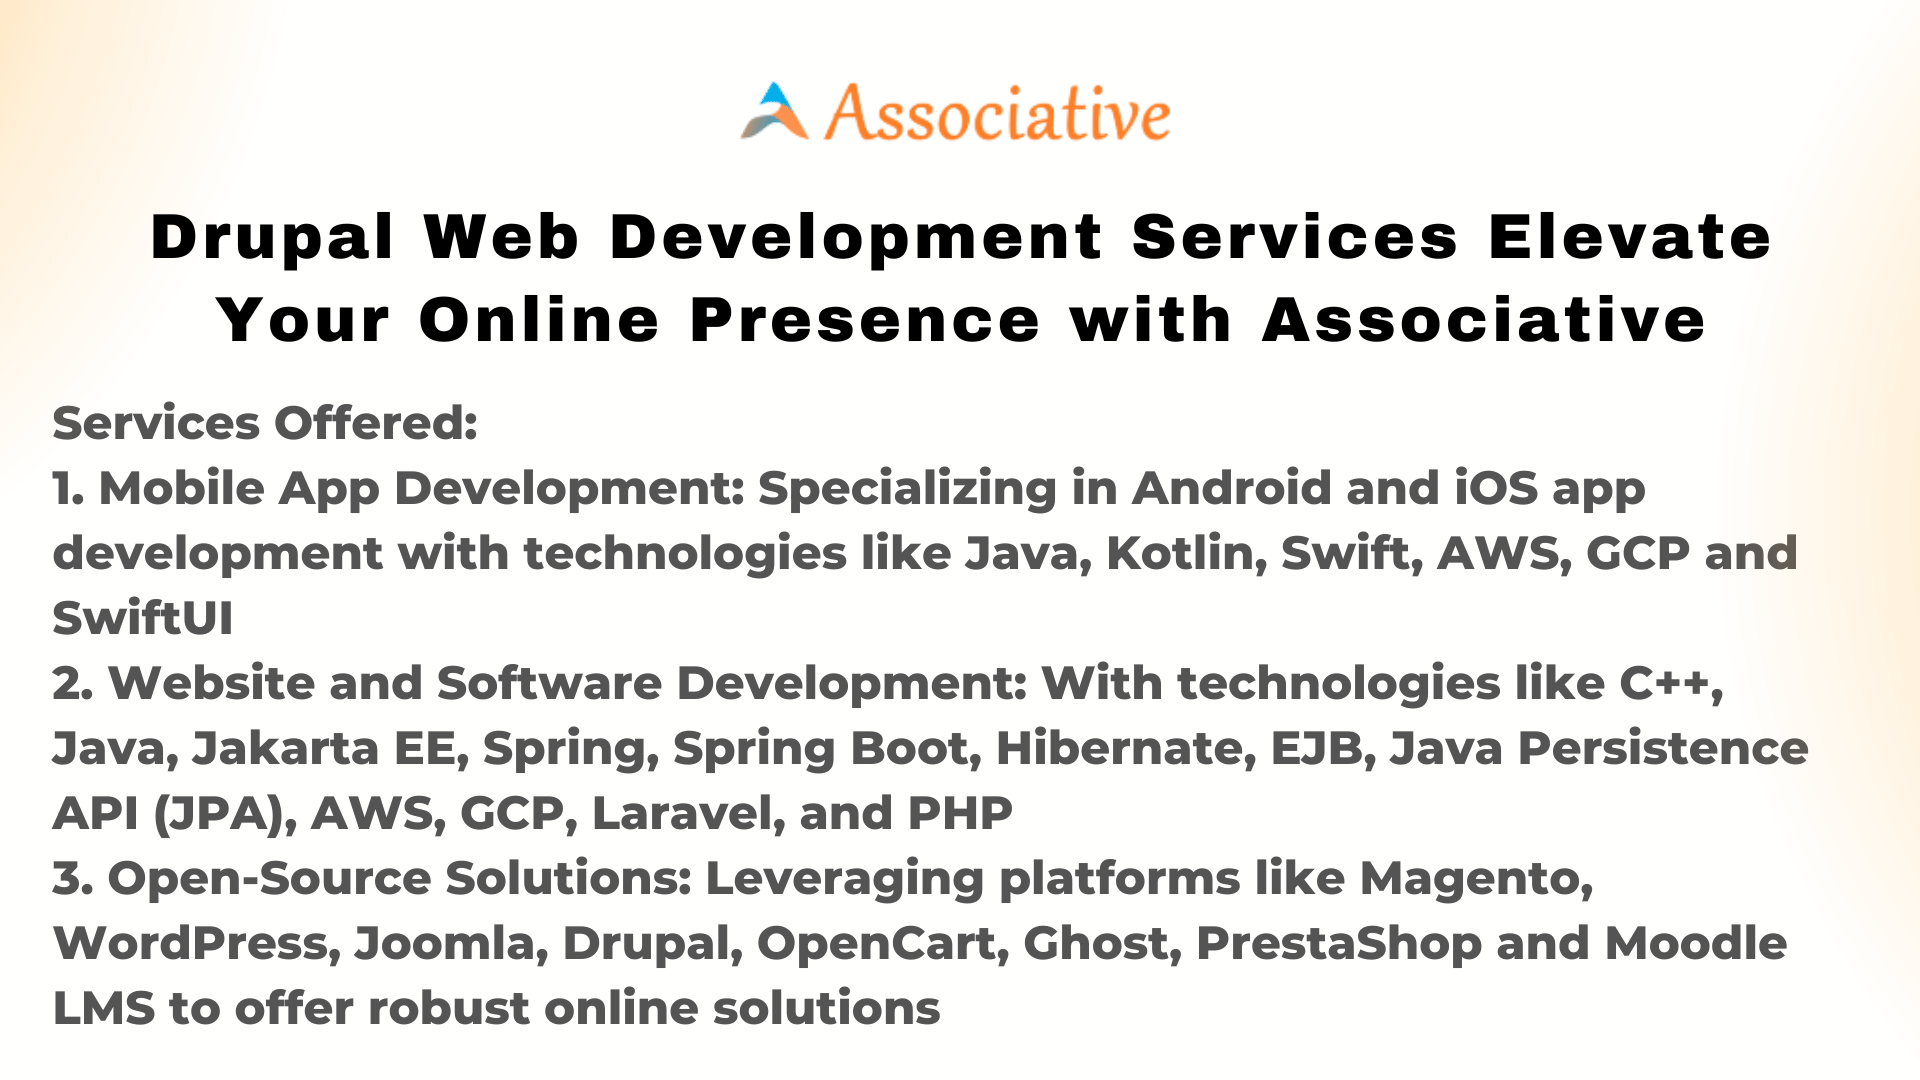 Drupal Web Development Services Elevate Your Online Presence with Associative